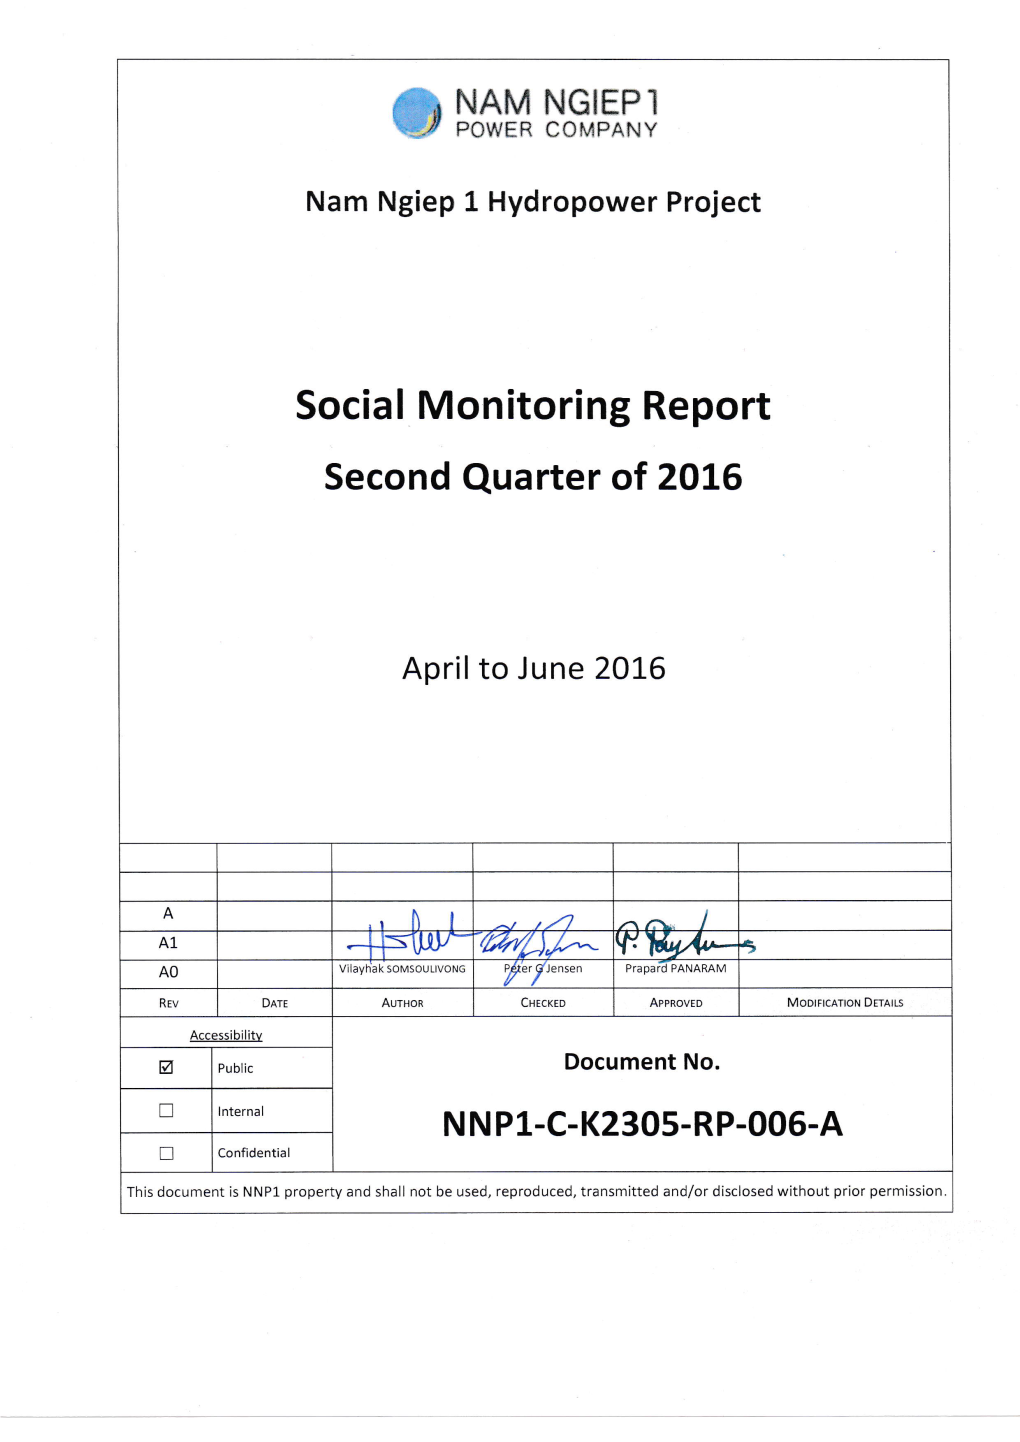 Social Monitoring Report Second Quarter of 2016